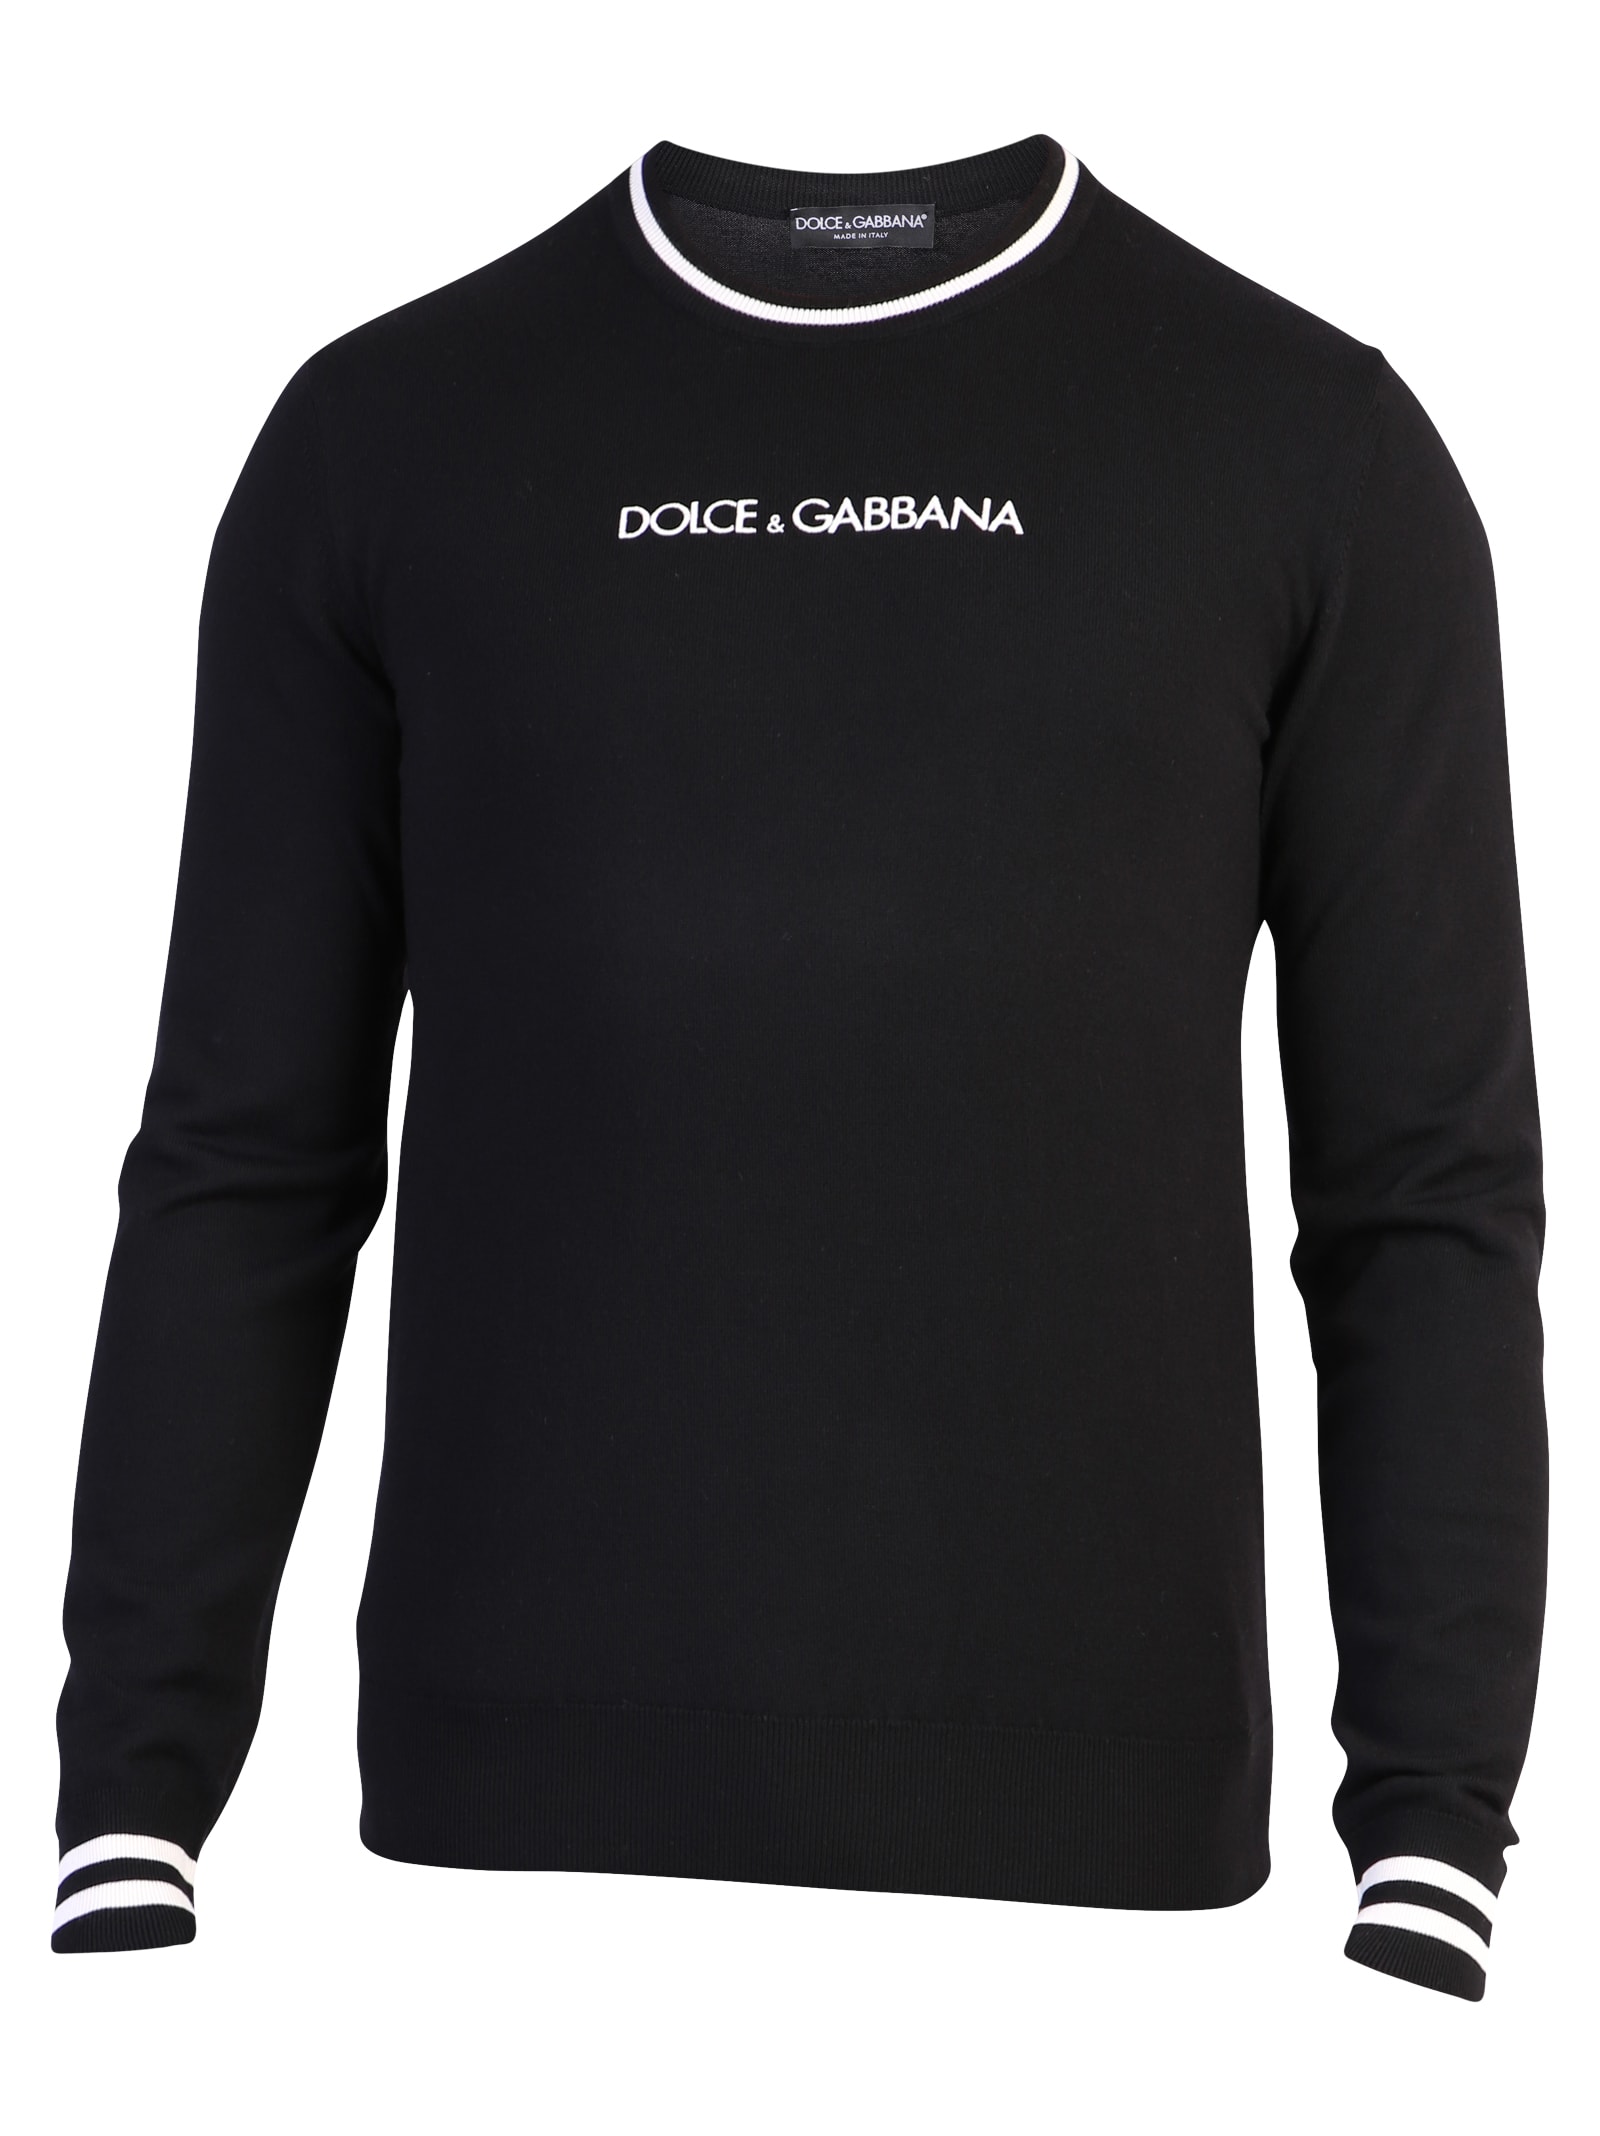 Dolce & Gabbana Dolce & Gabbana Branded Sweater - Black - 10791108 ...